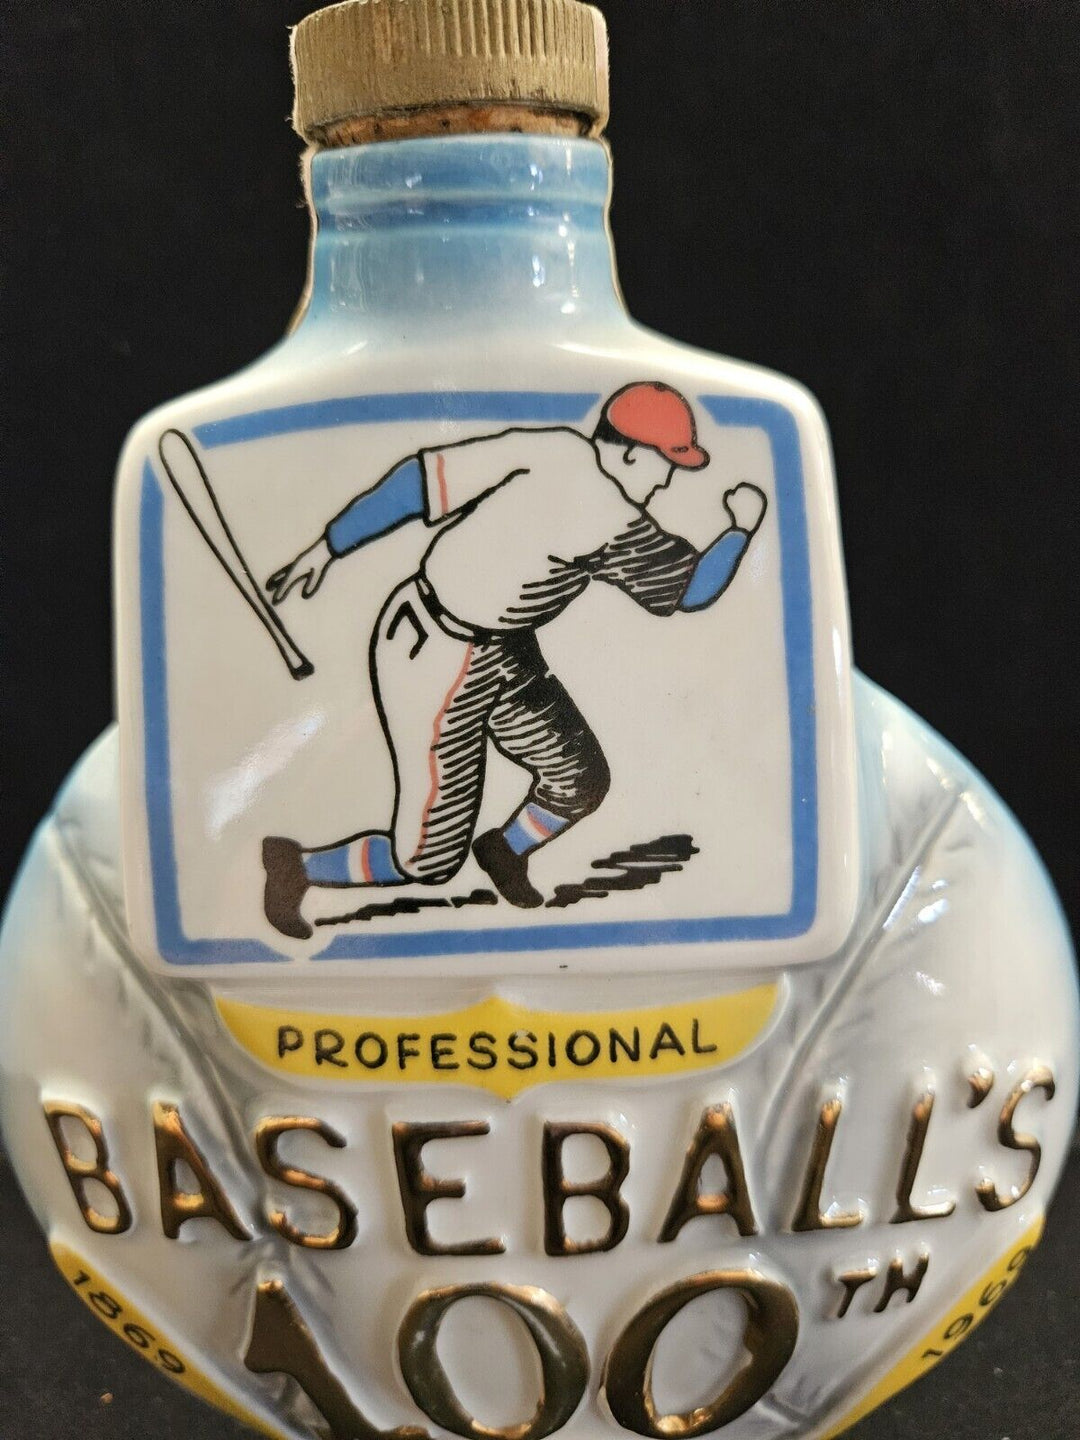 1969 Jim Beam Professional Baseballs 100th Anniversary Decanter Empty